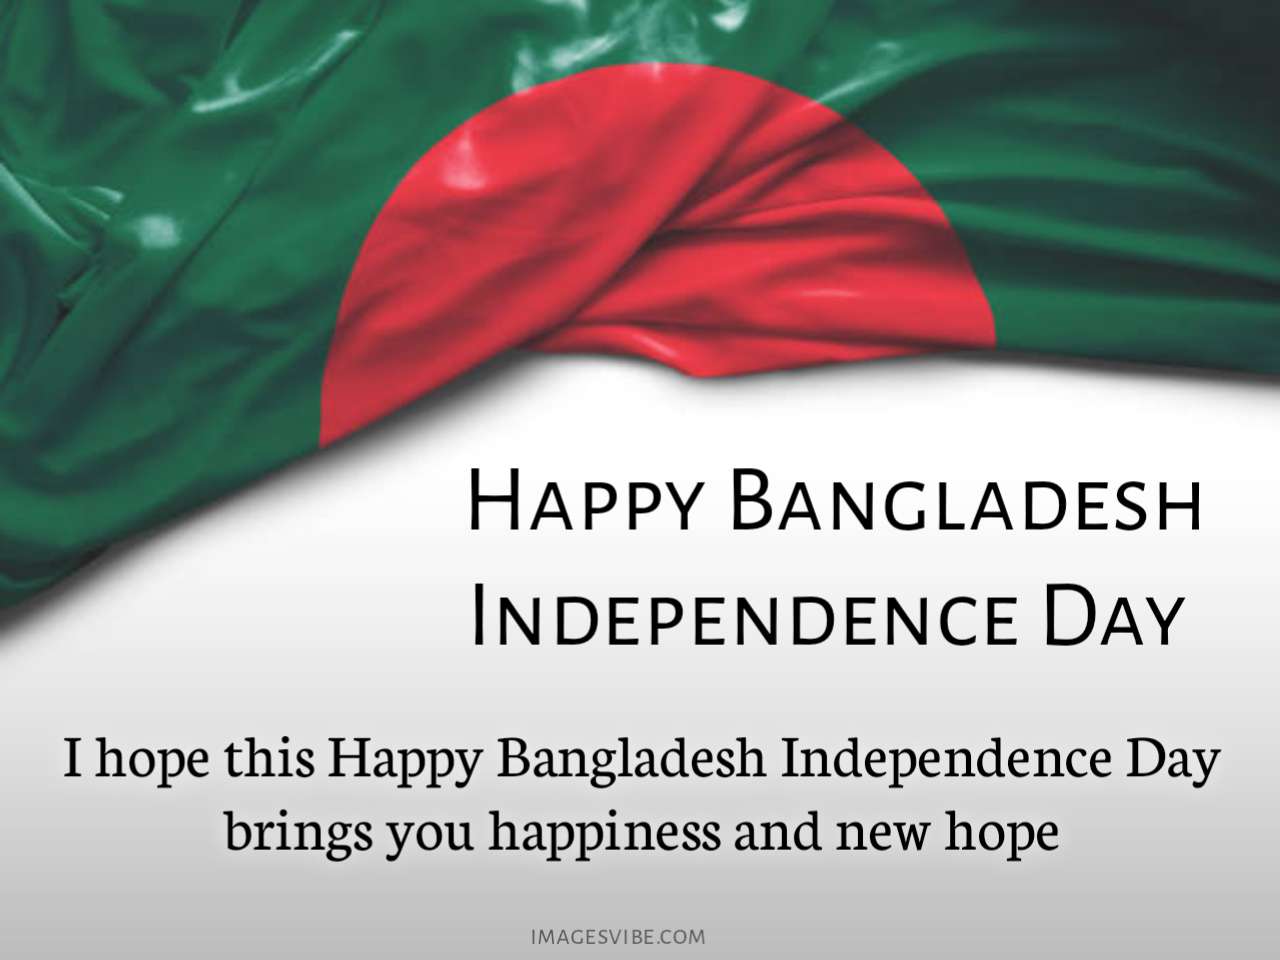 Bangladesh Independence Day Images